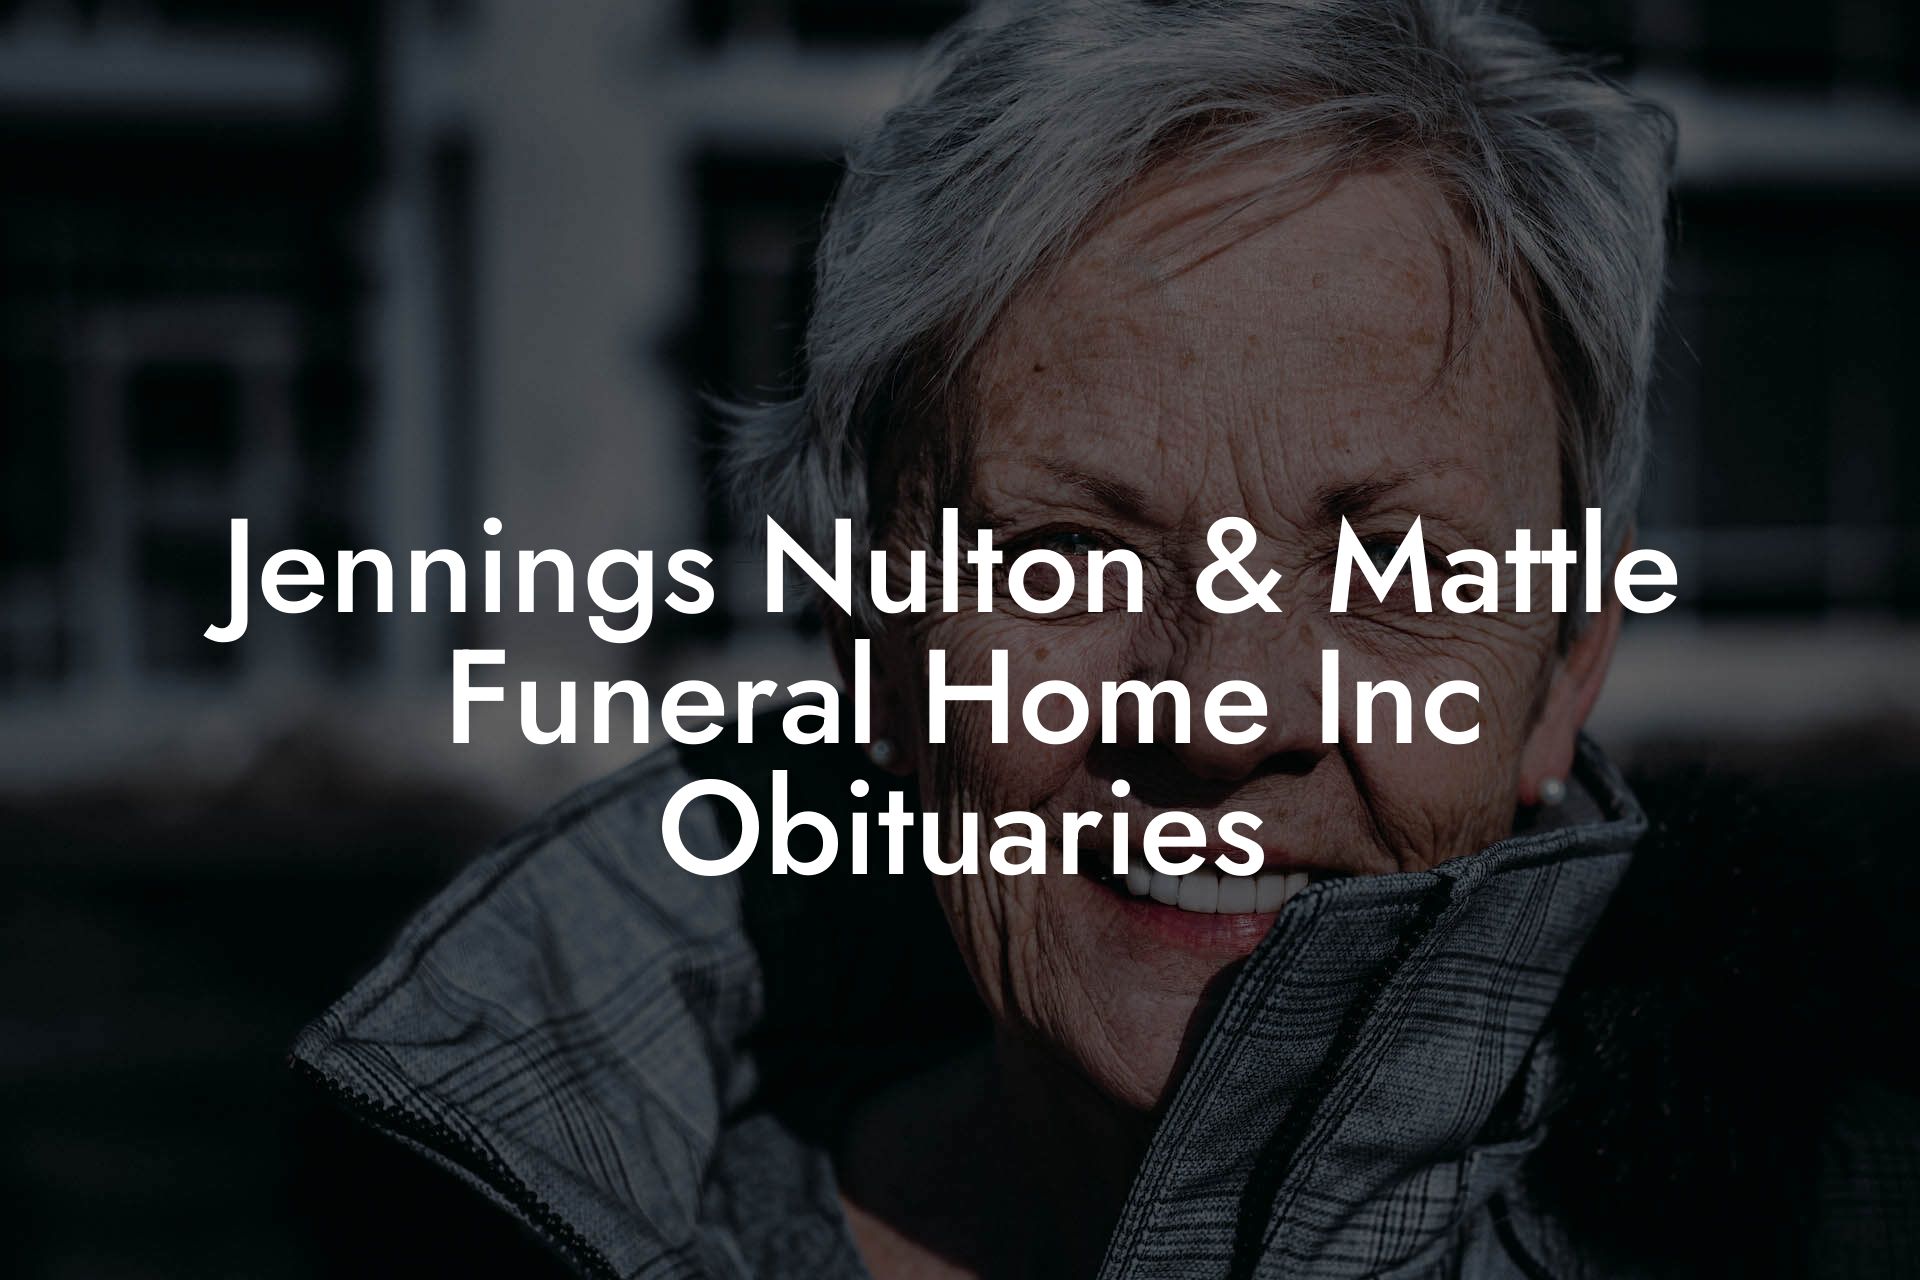 Jennings, Nulton & Mattle Funeral Home, Inc. Obituaries